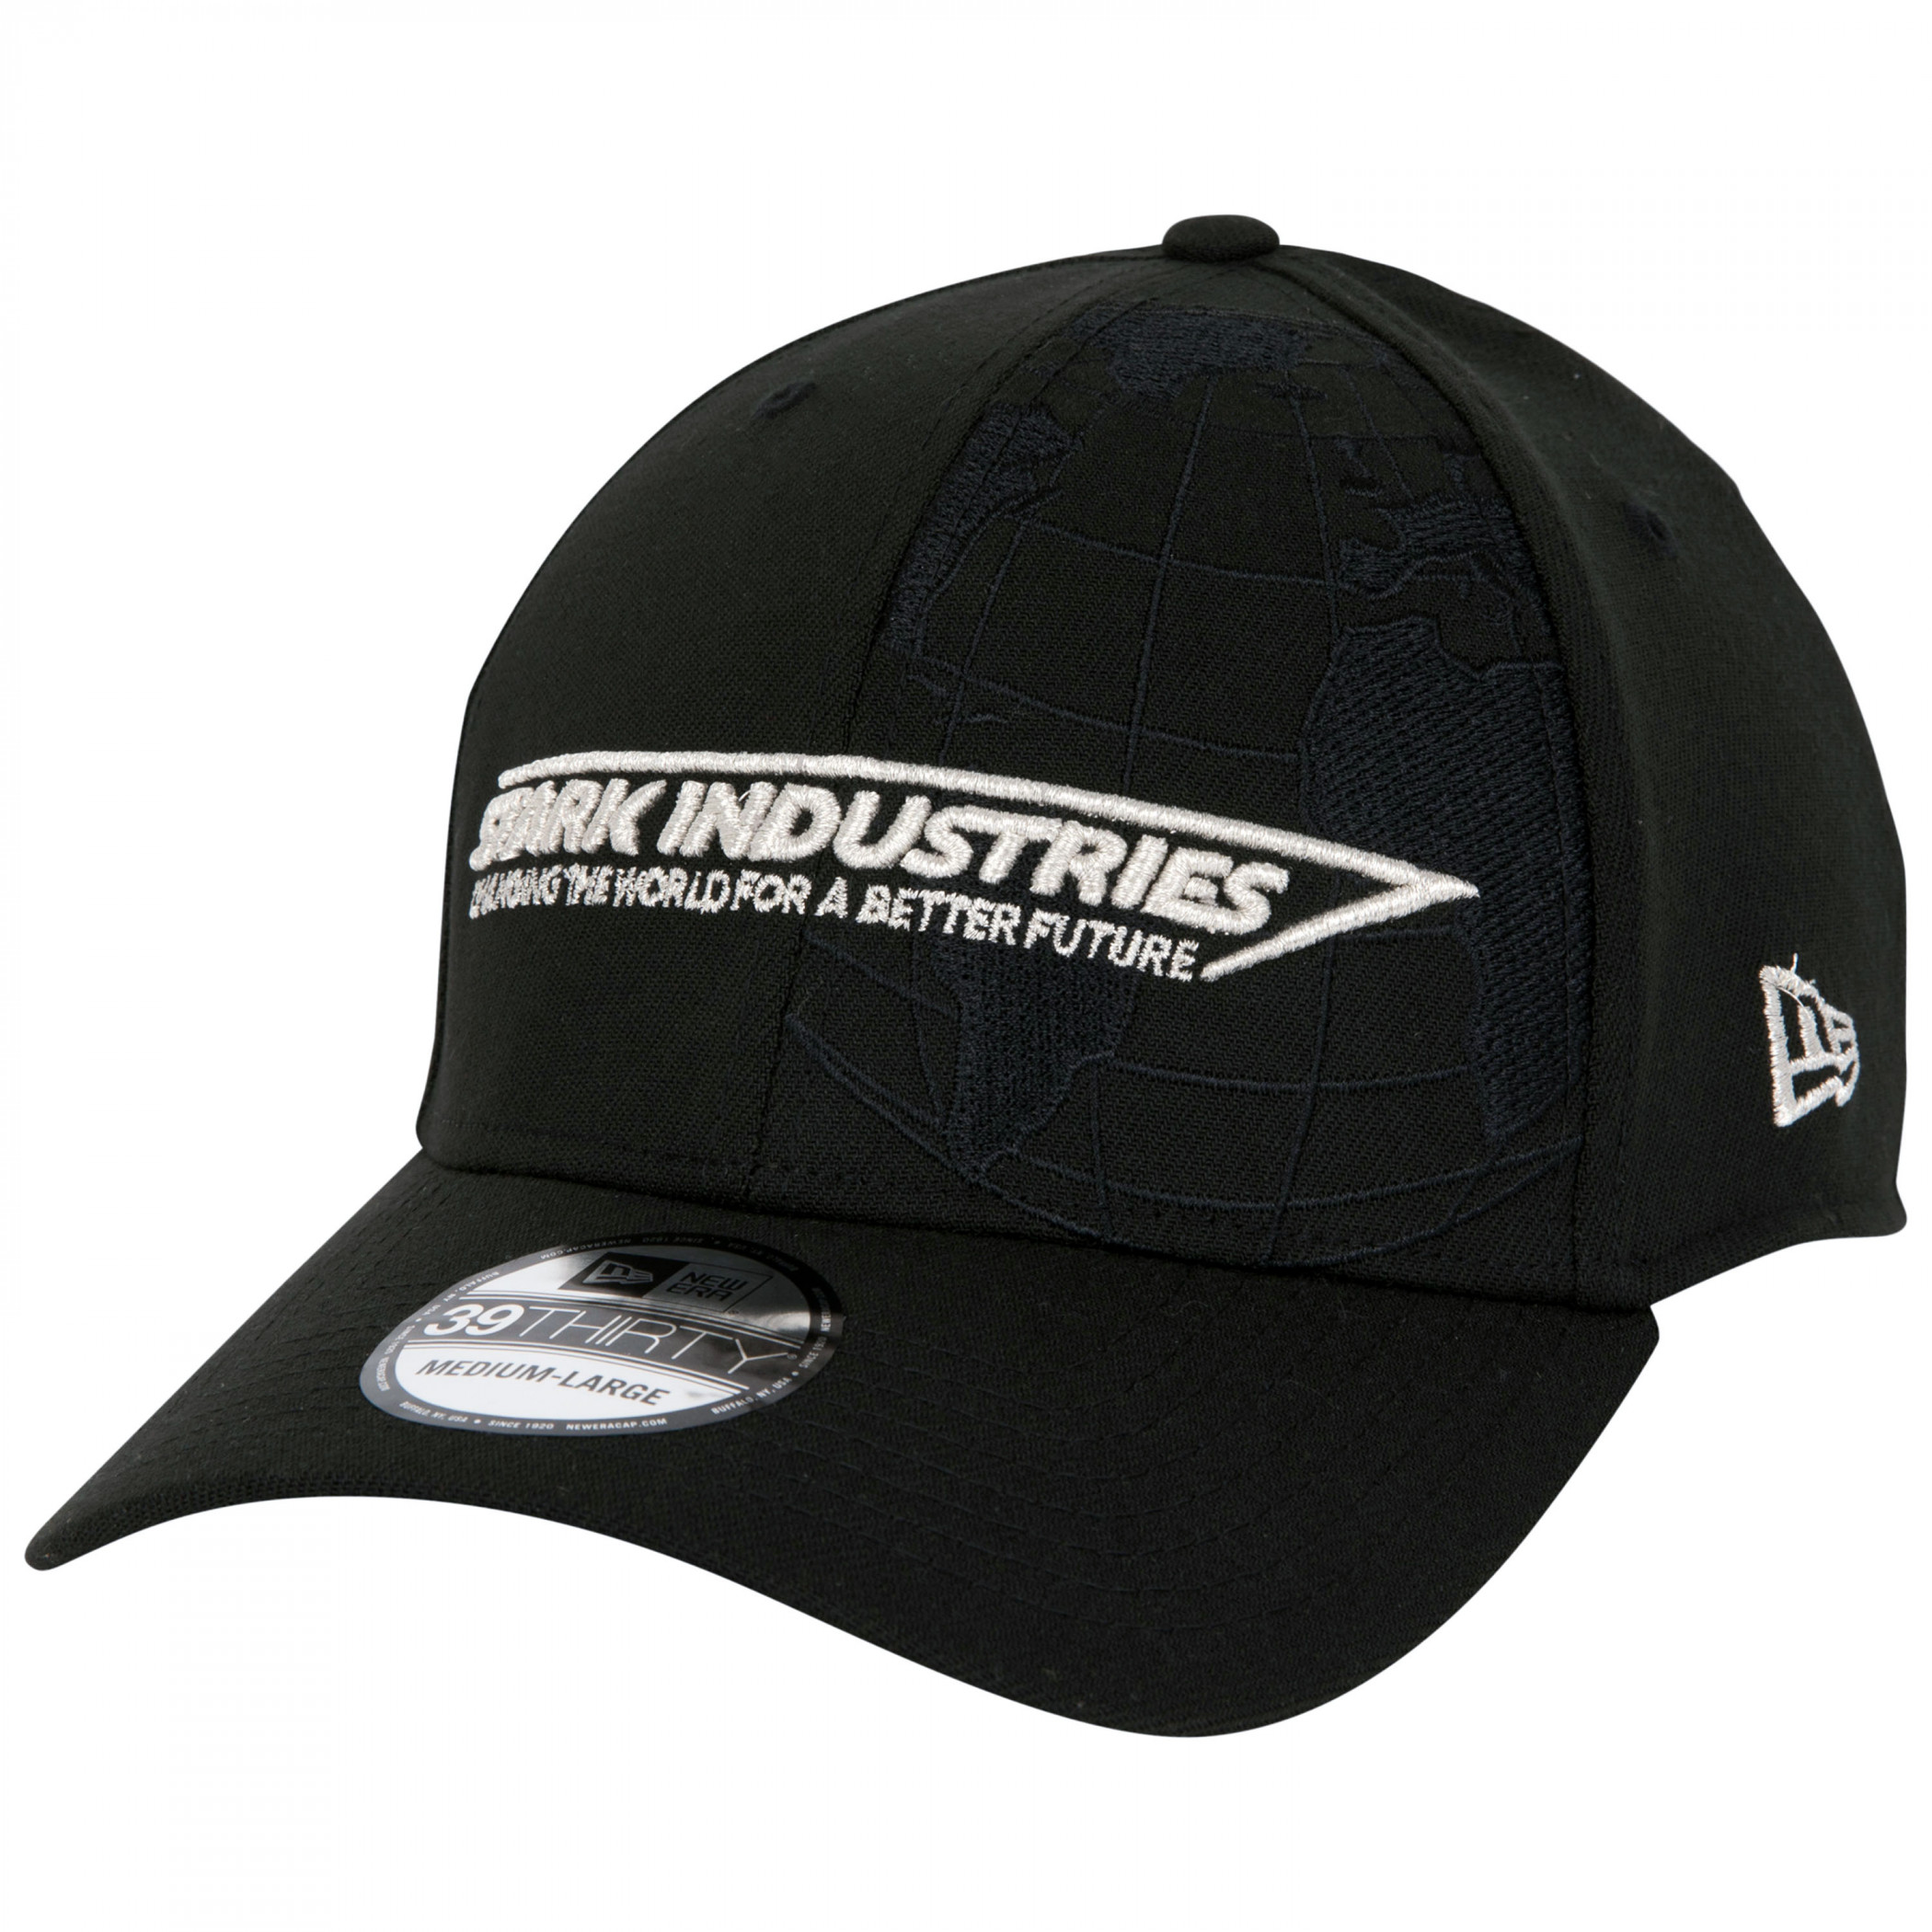 Iron Man Stark Industries New Era 39Thirty Fitted Hat